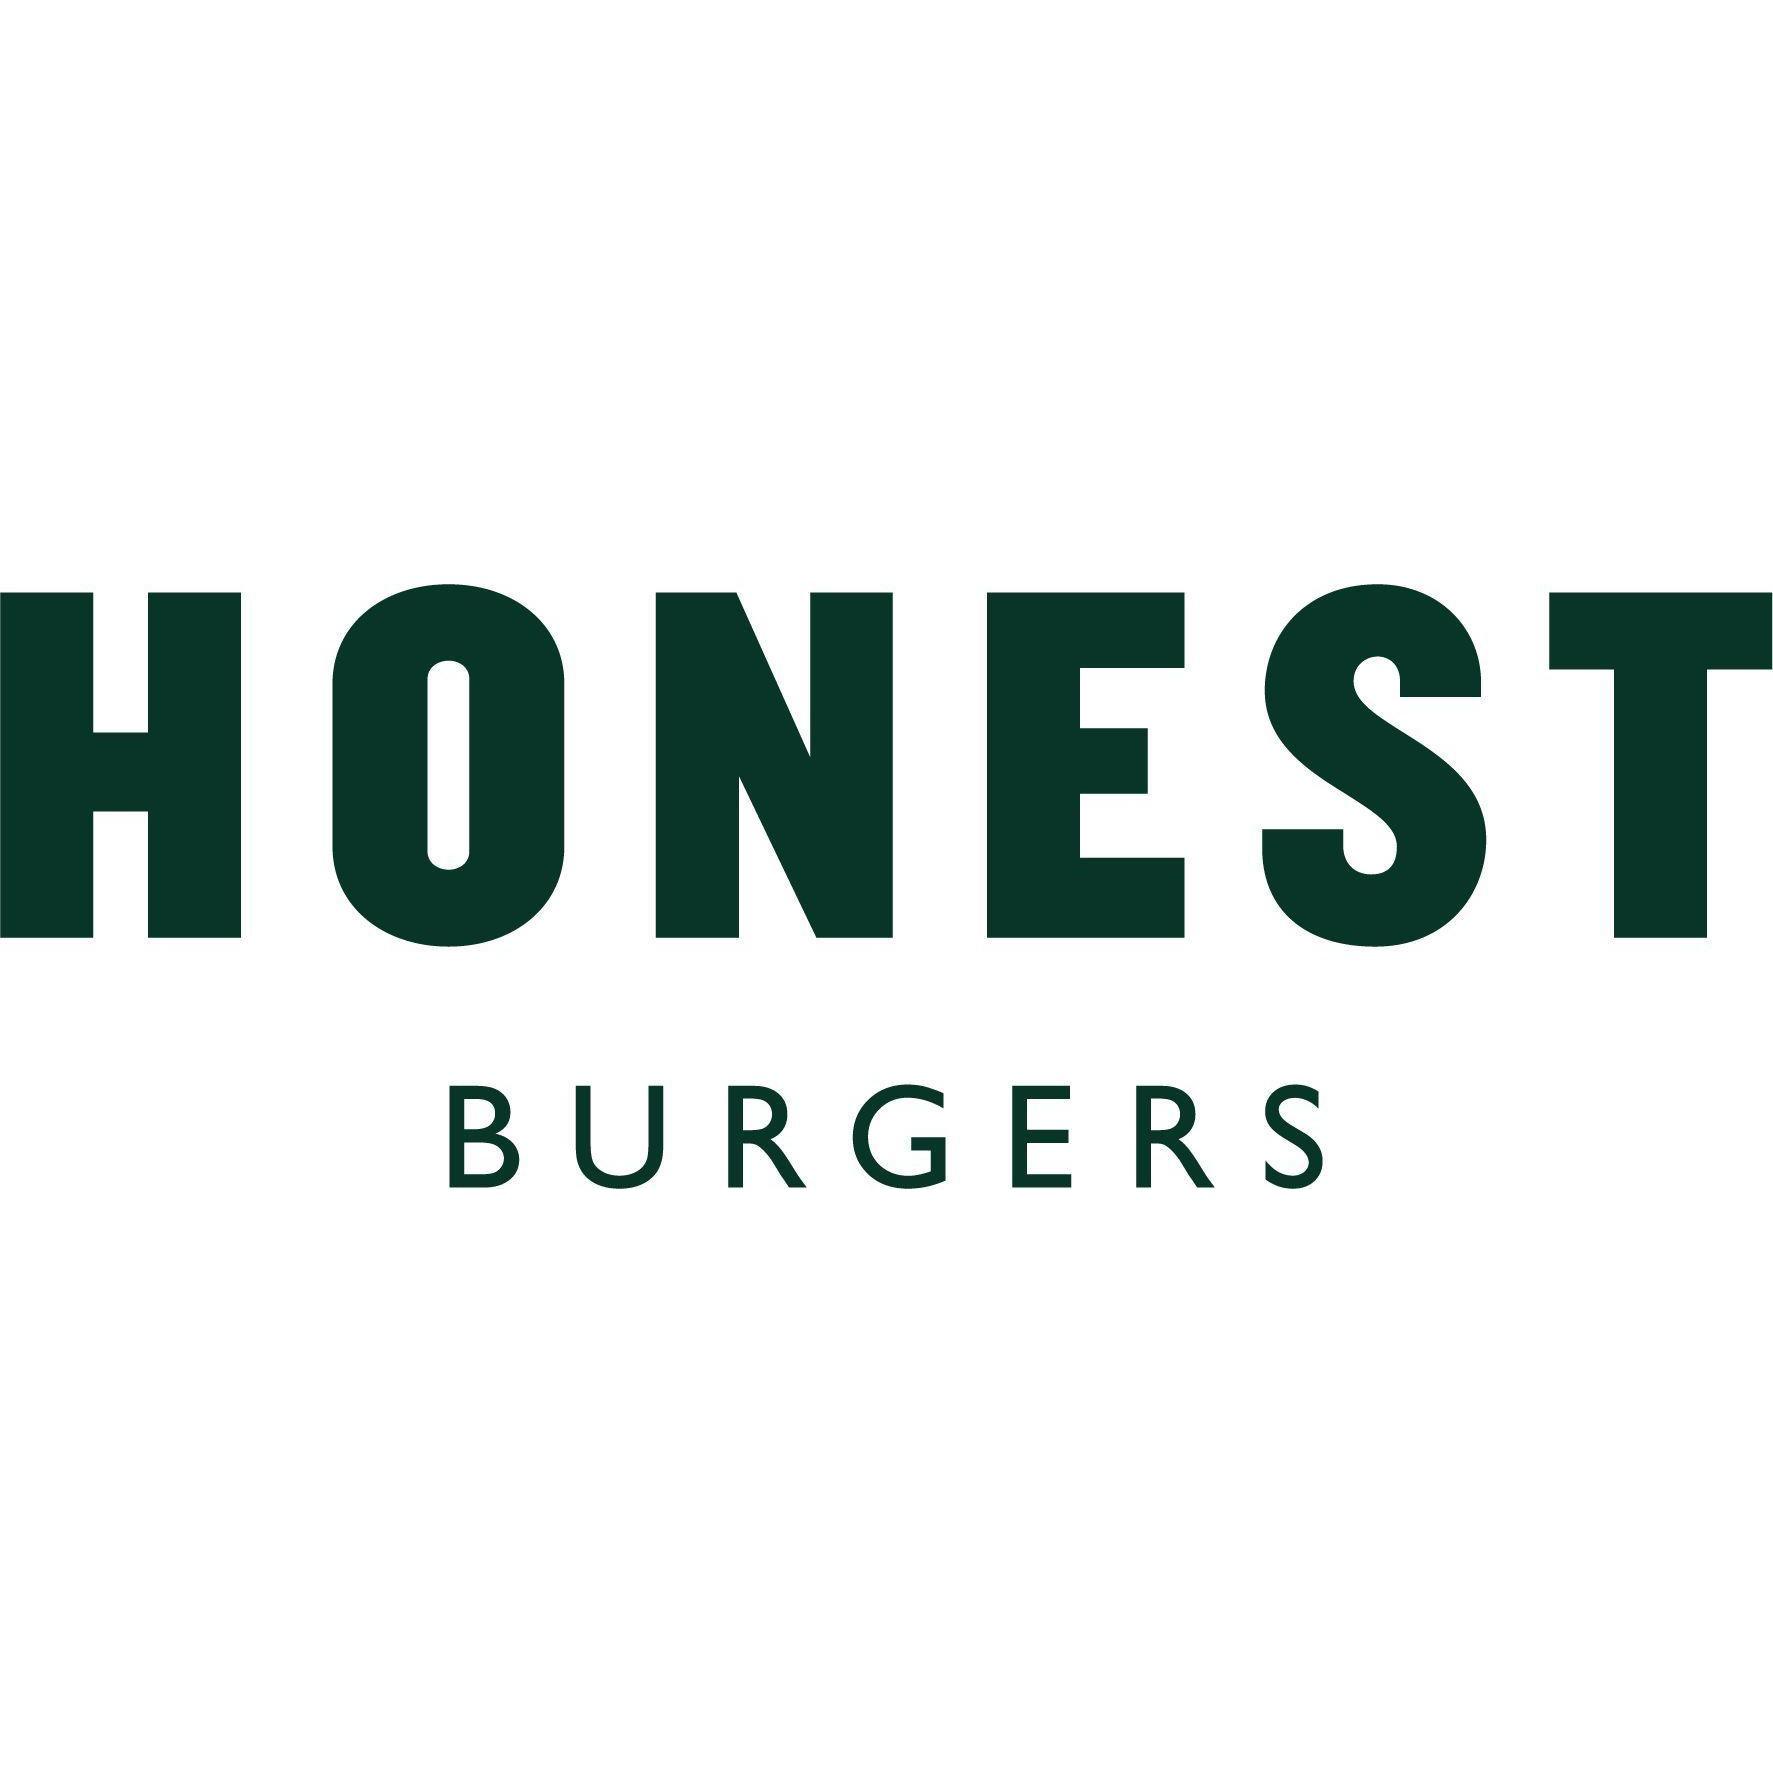 Honest Burgers Chiswick London 020 3597 6230